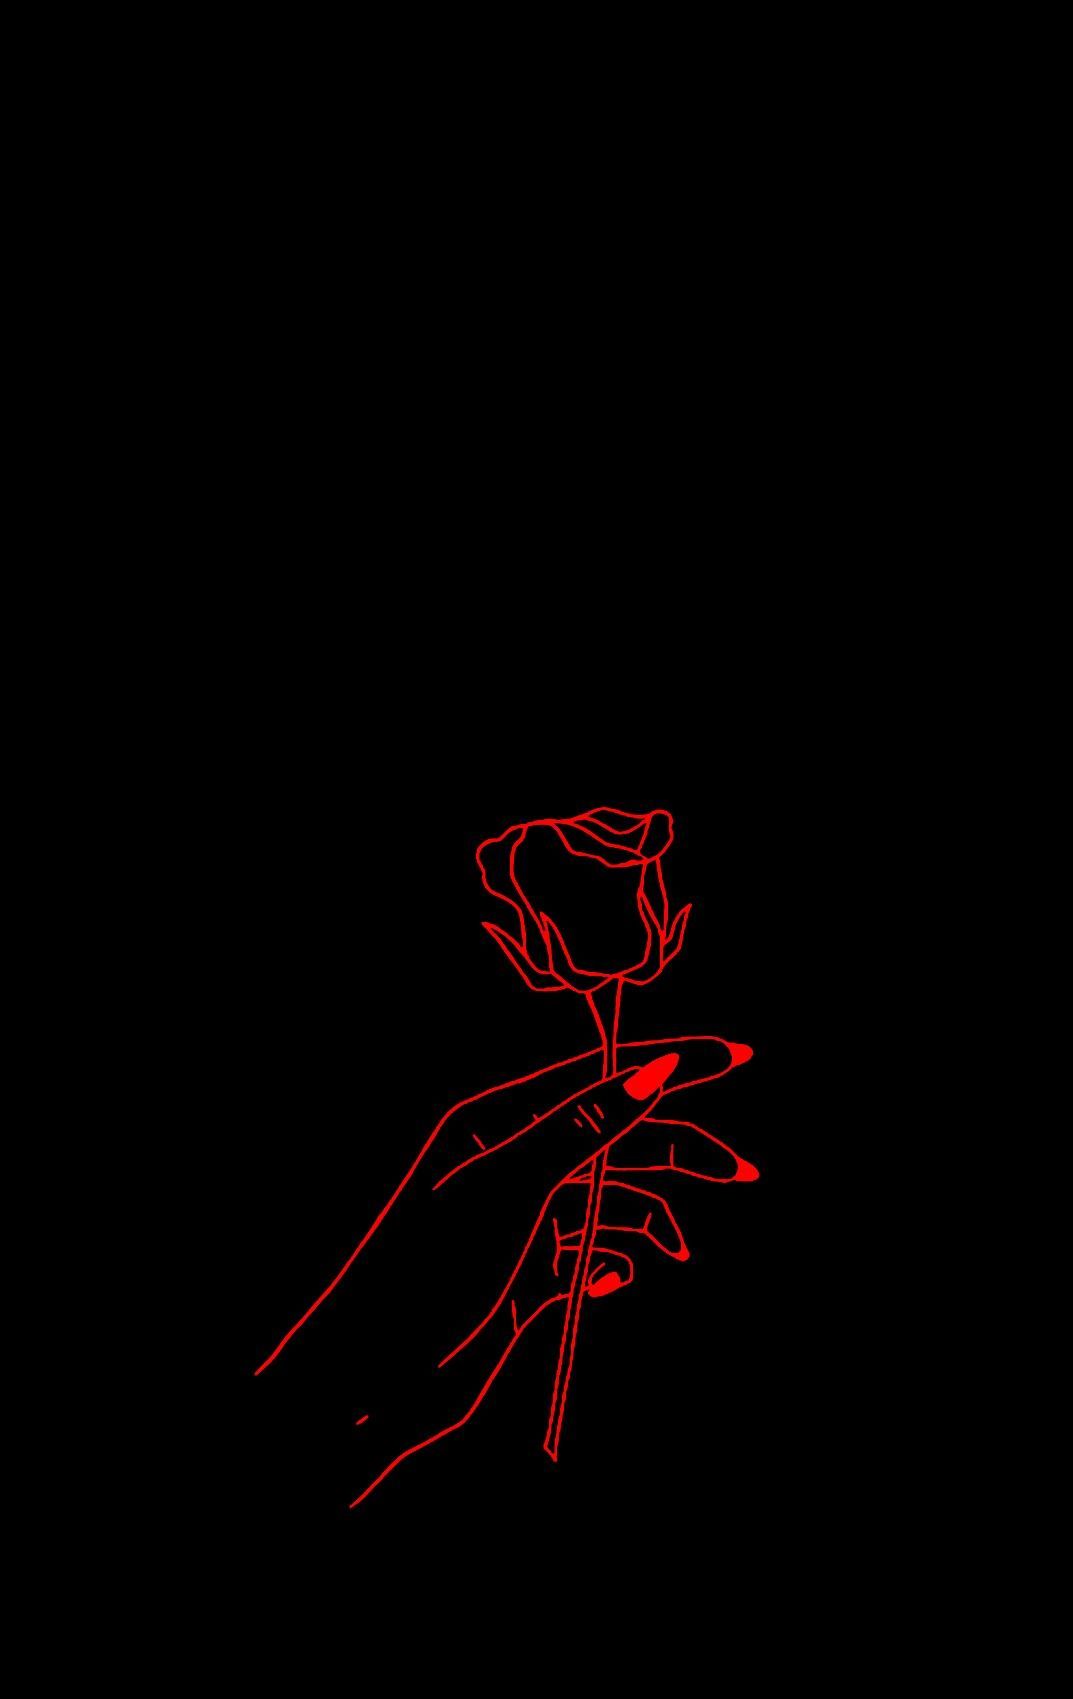 Red rose on black background - Roses, black glitch